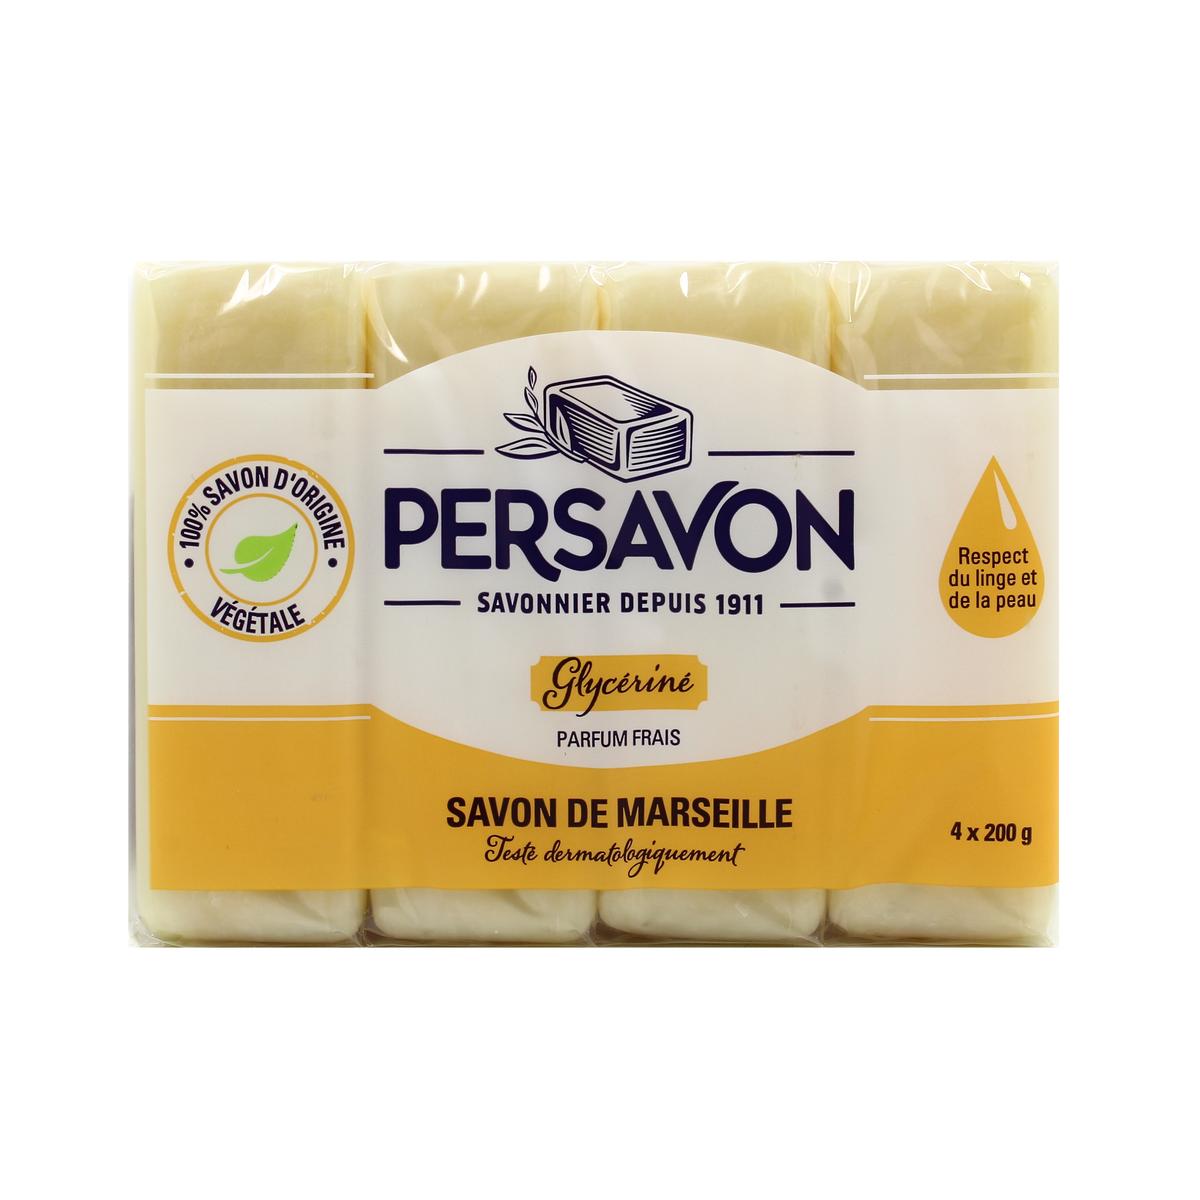 Acheter Persavon Savon de Marseille glycériné parfum frais, 4x200g